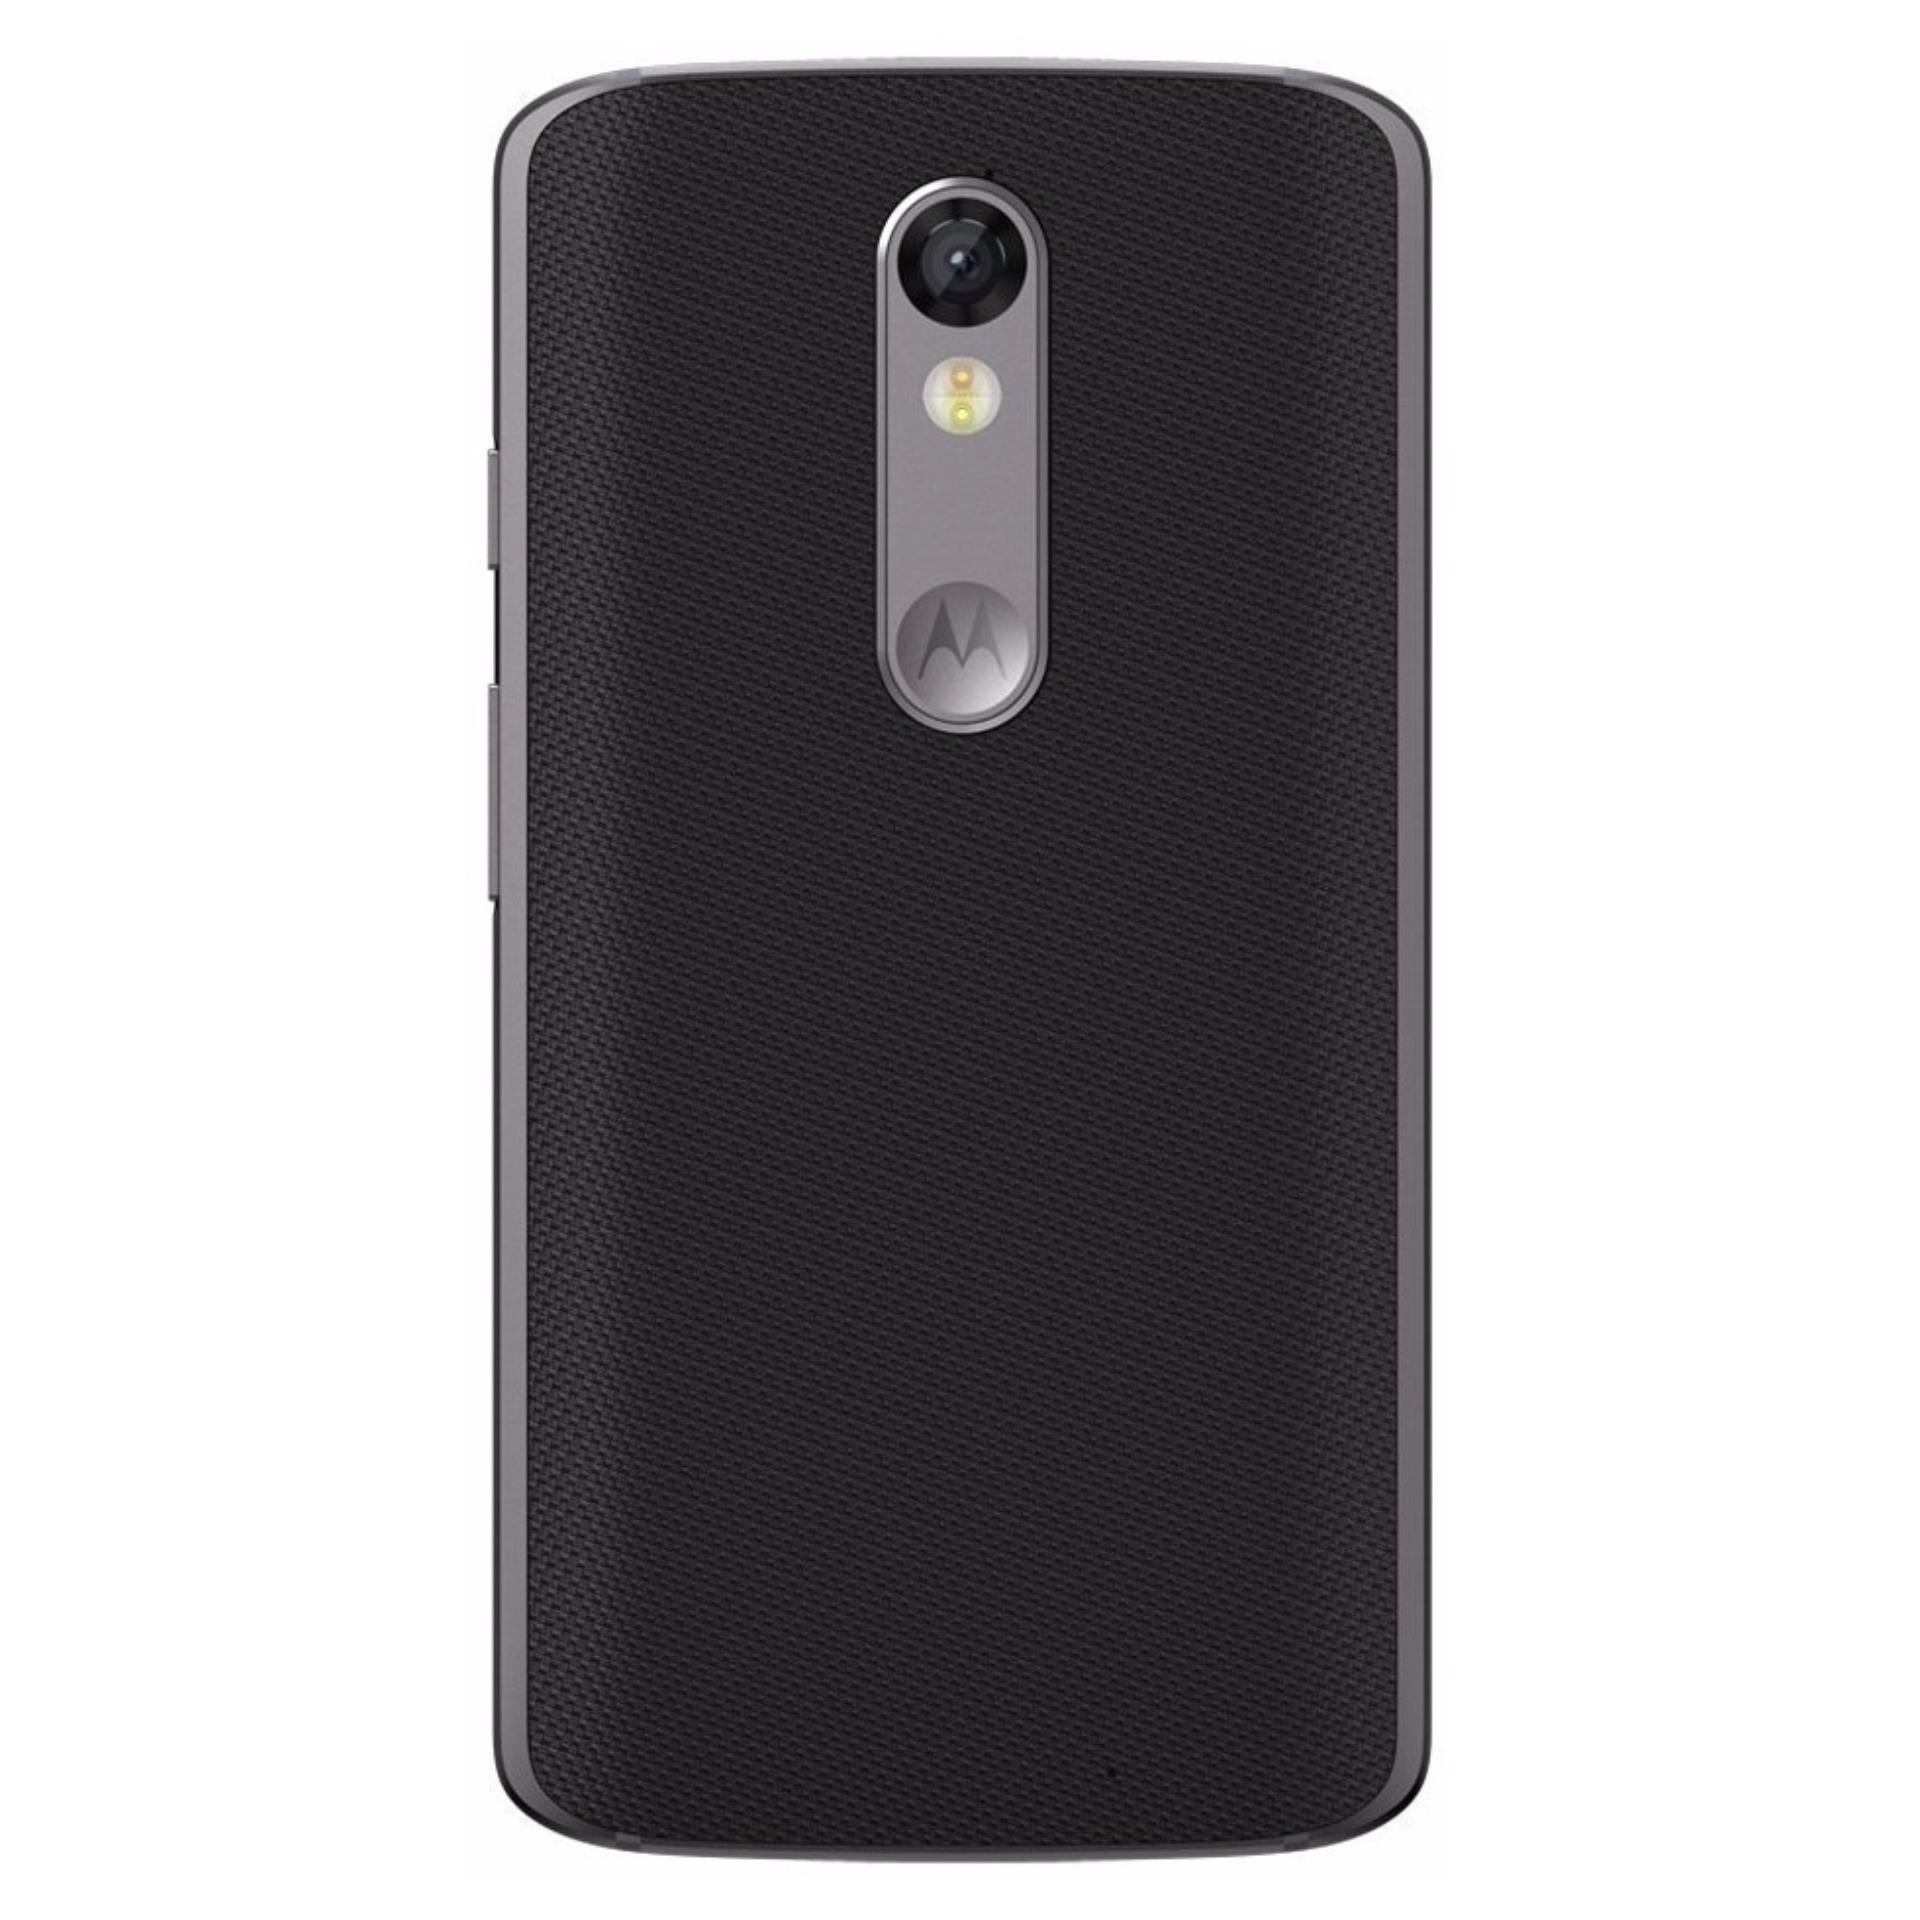 Motorola Moto X Force XT1580 64GB - Local Set (Black)